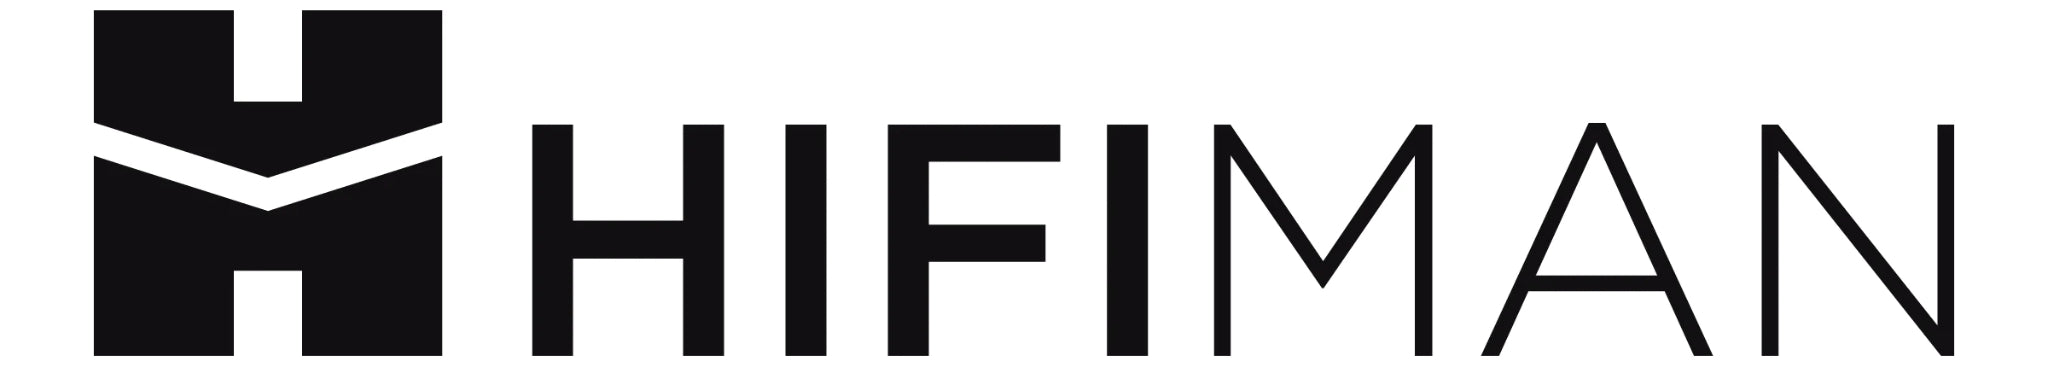 HiFiMAN brand logo